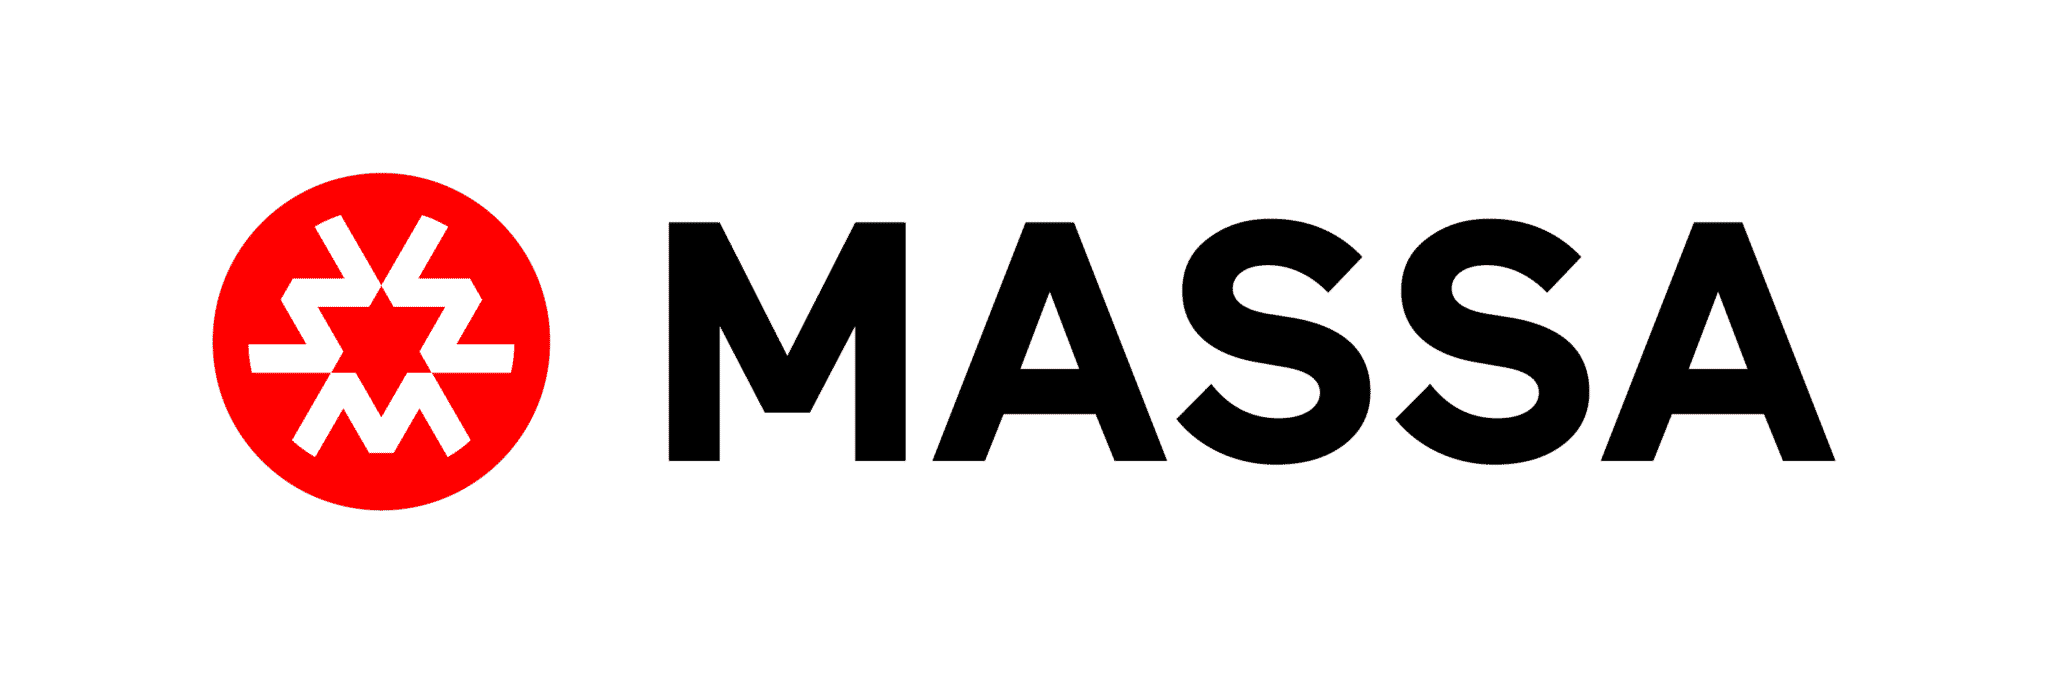 MASSA_Blockchain_Crypto_Contrats_Intelligents_Autonomes